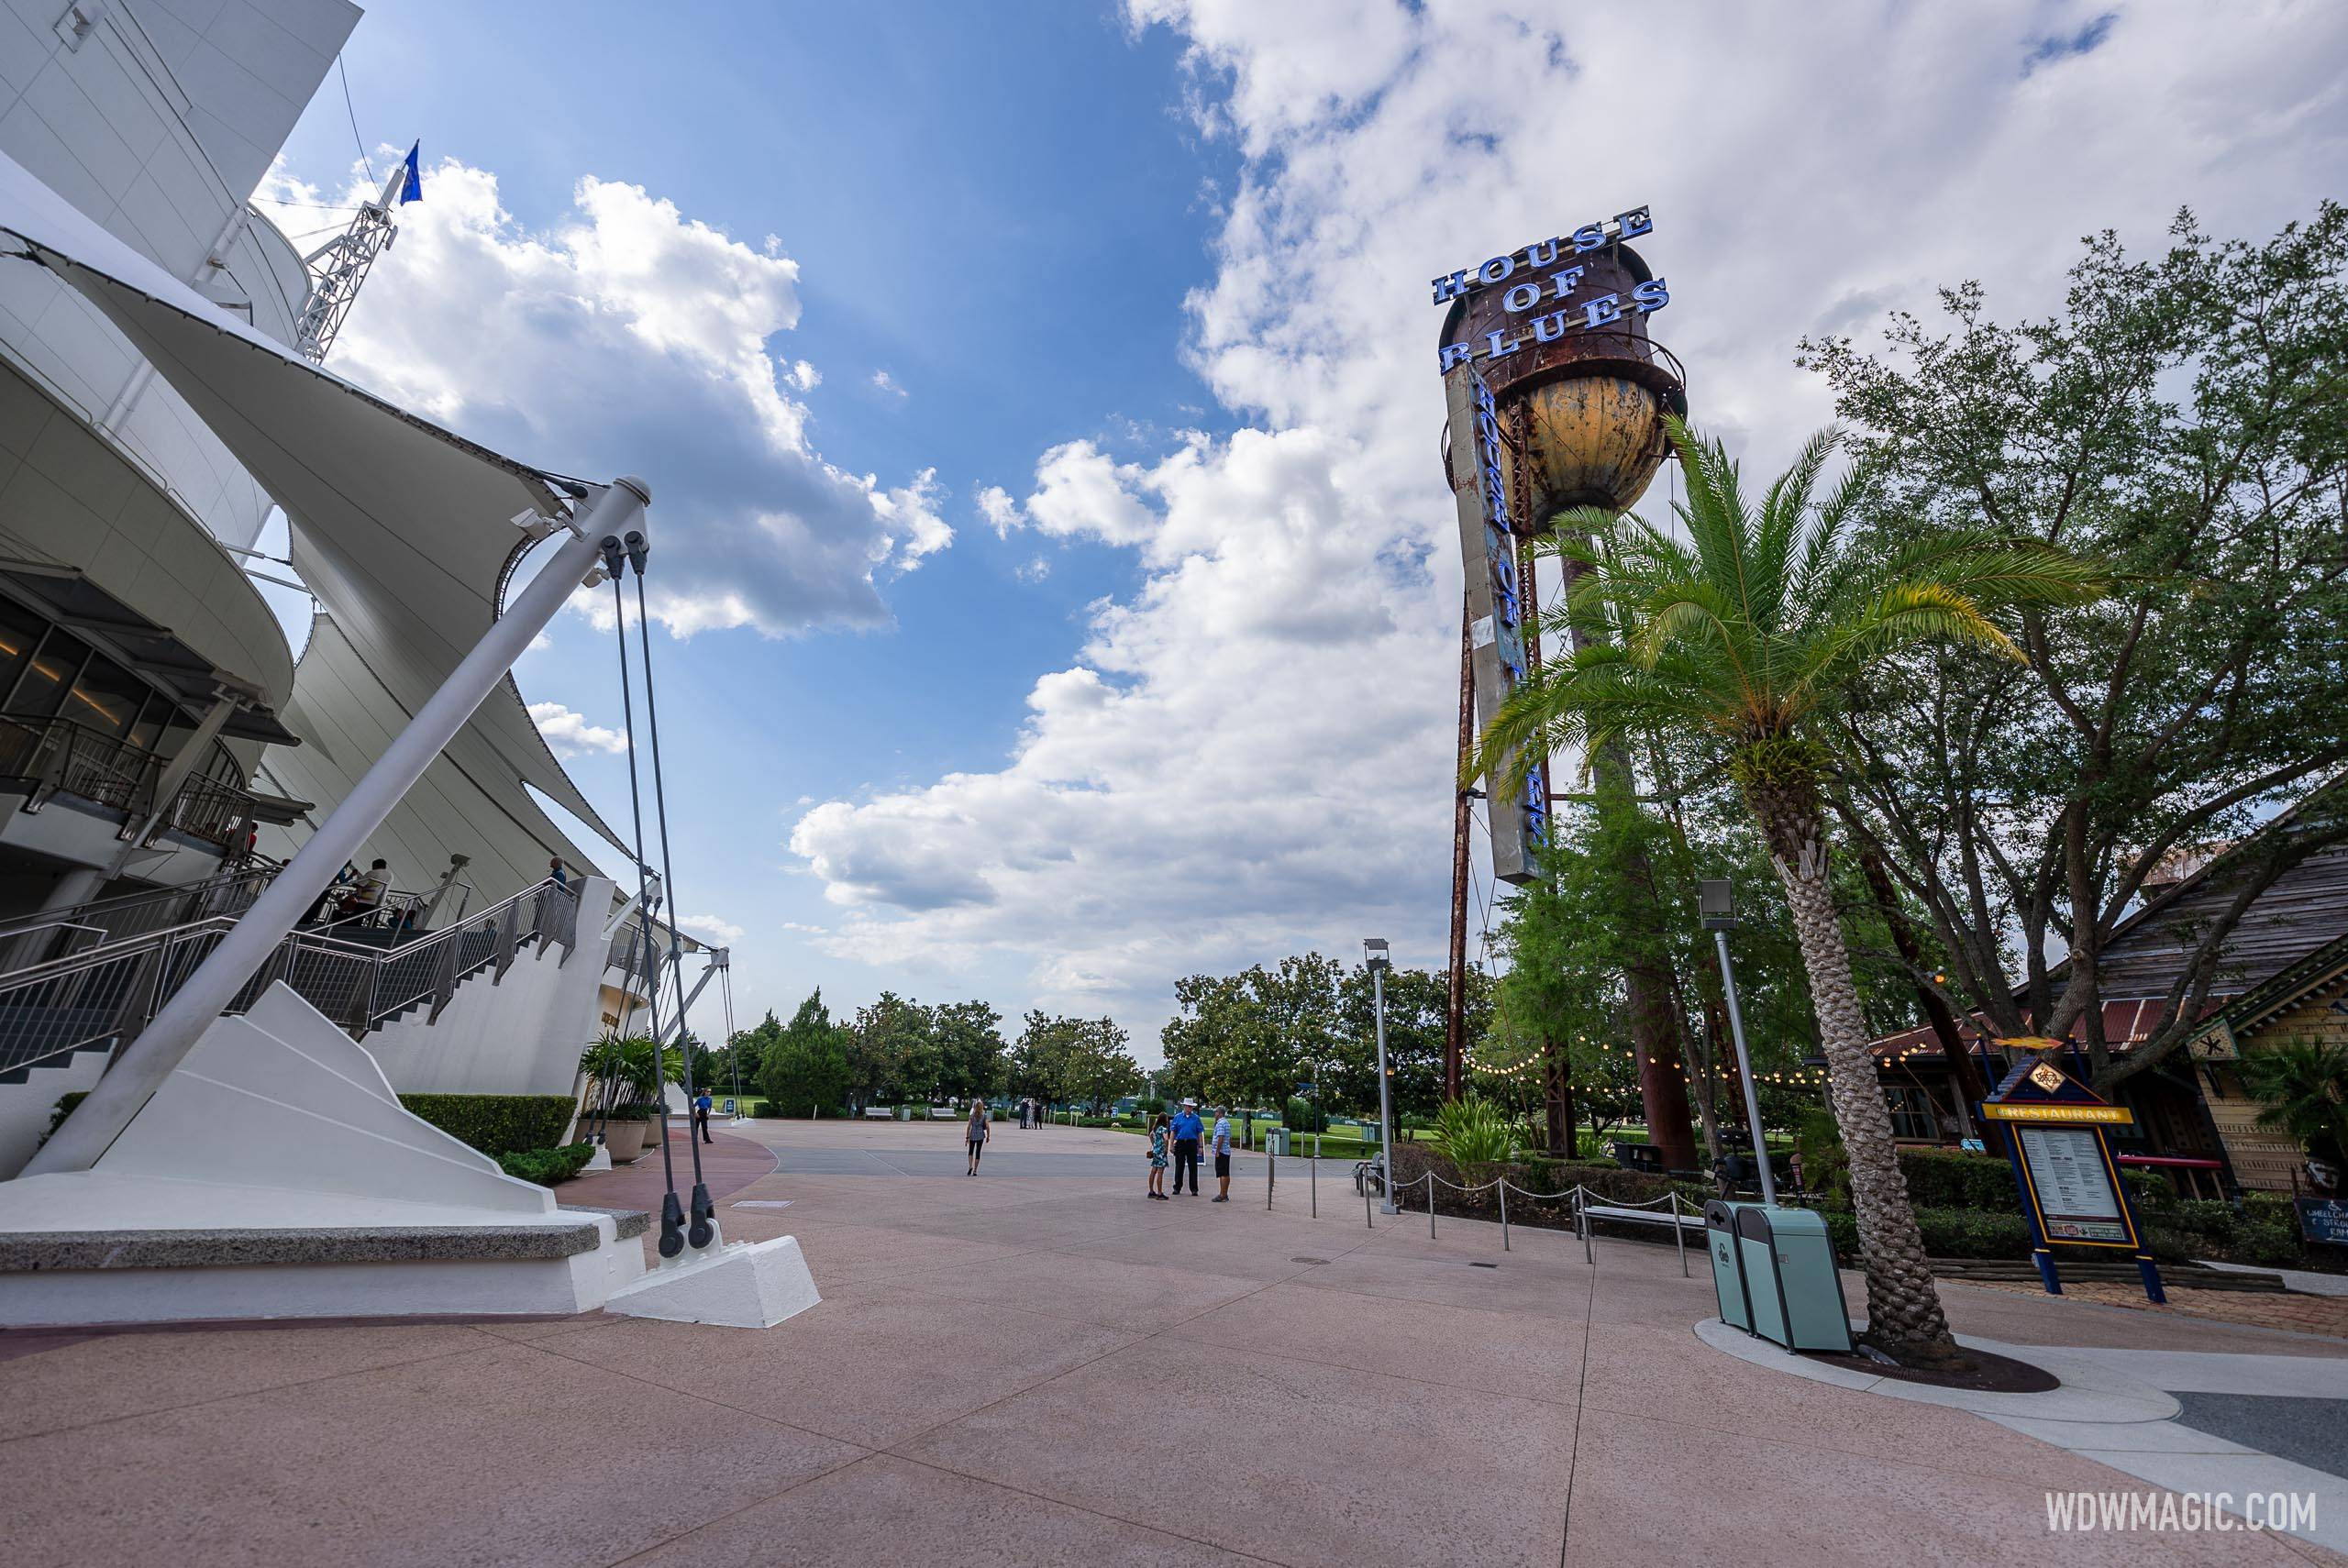 Disney Dreams That Soar entrance near Cirque du Soleil